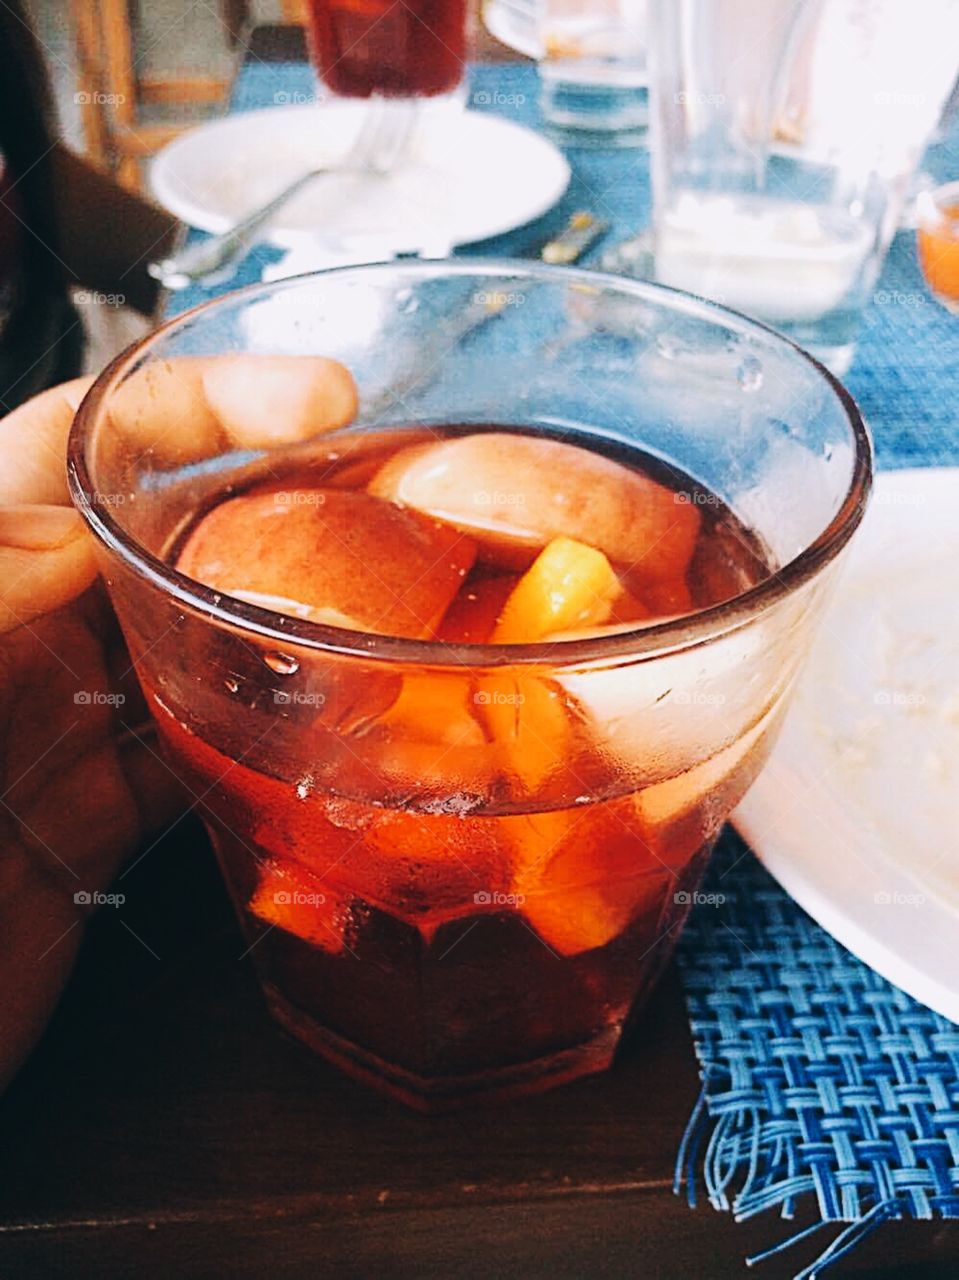 Fruity wine . Cheers! 🥂